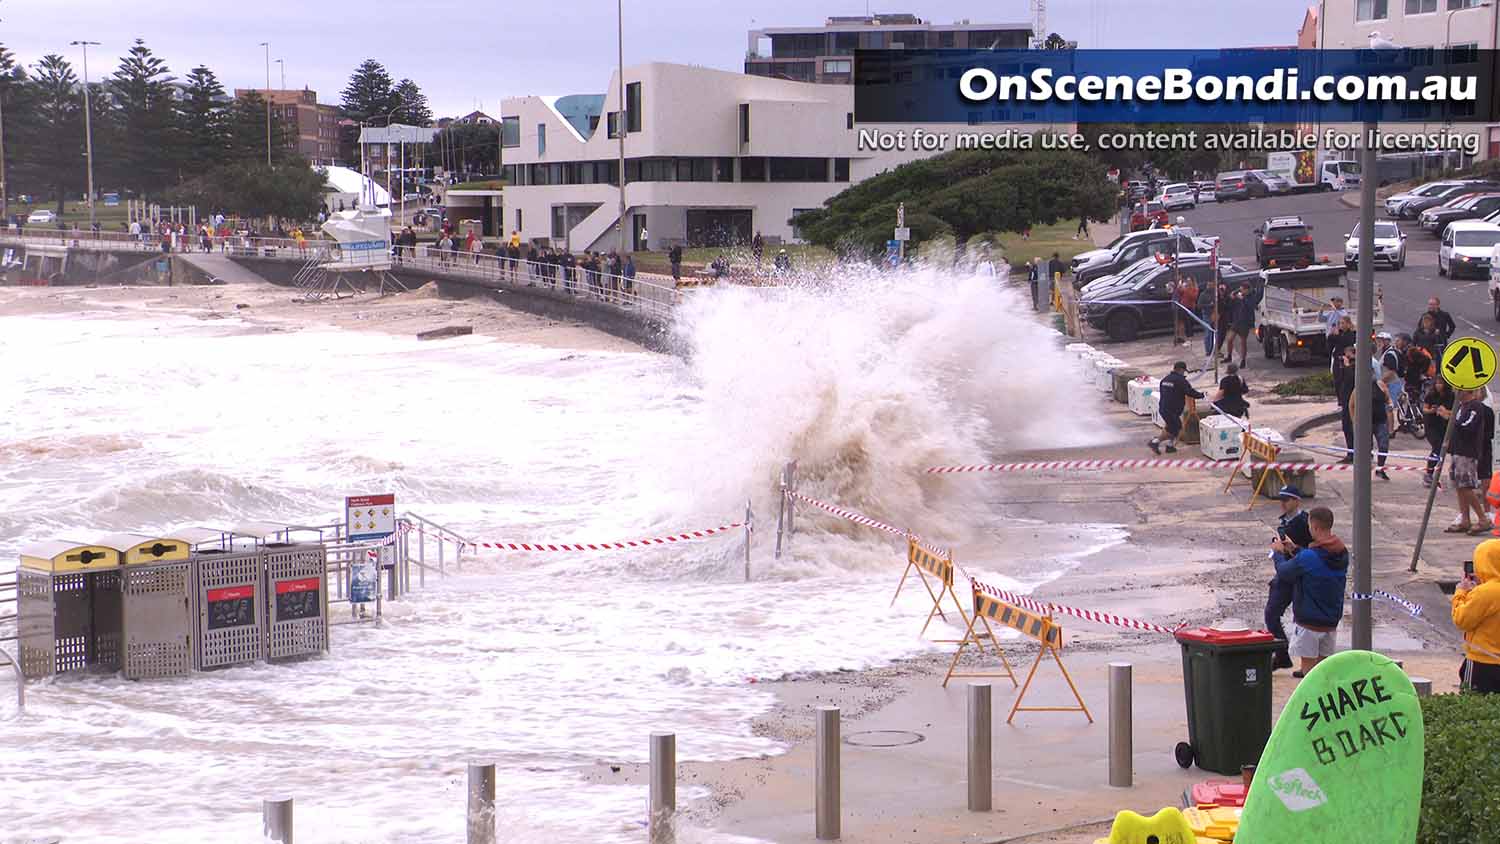 Huge waves impact Bondi Beach sending the sea onto the road